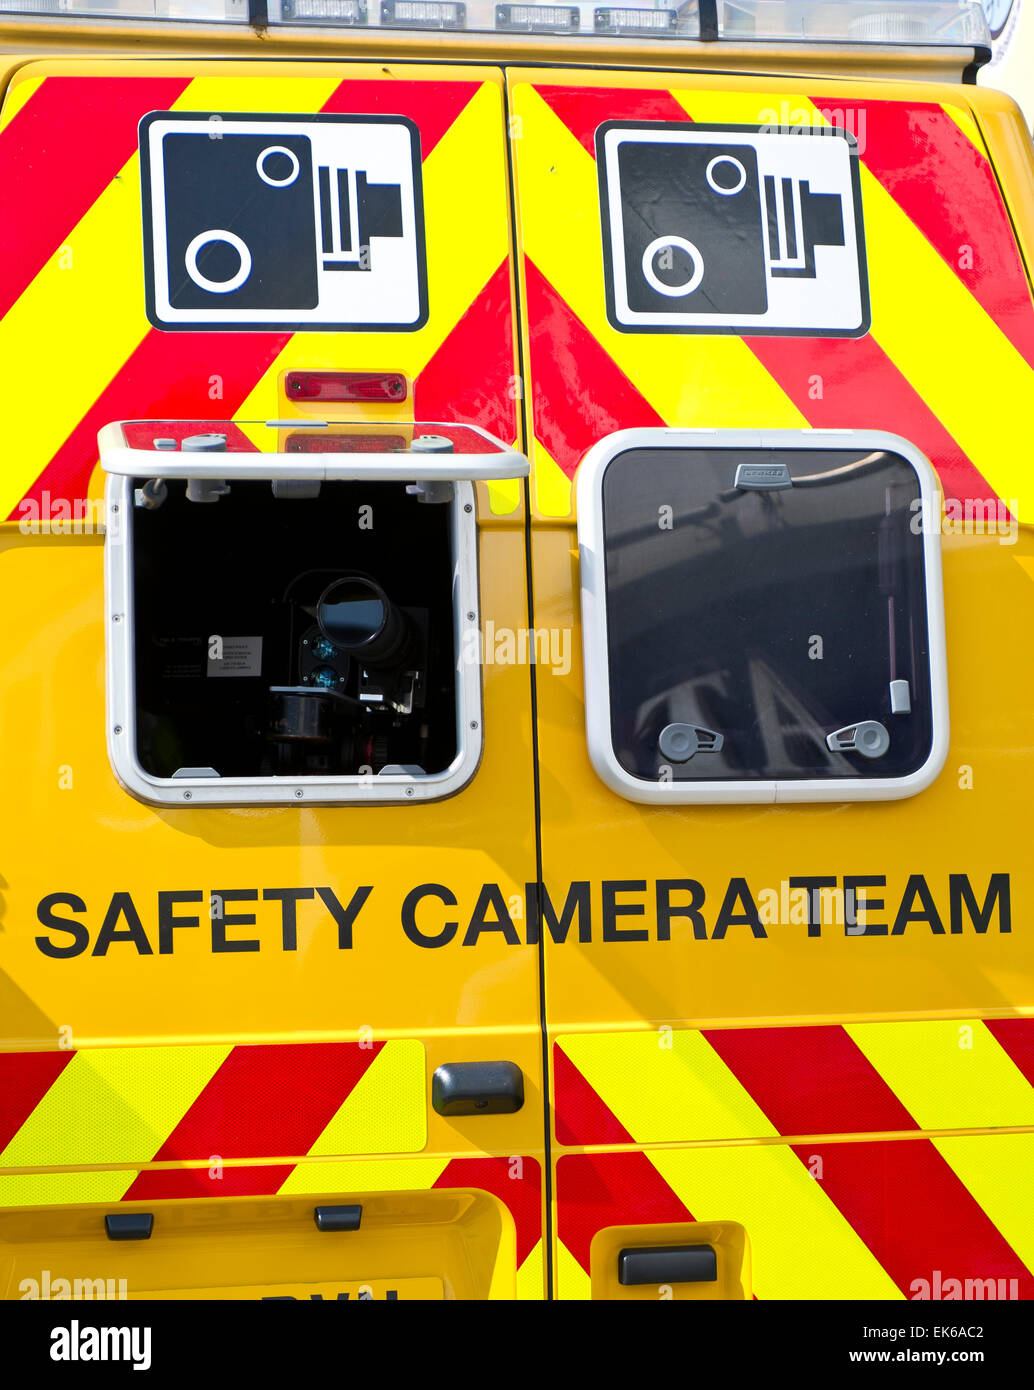 Safety Camera Team vehicle Stock Photo